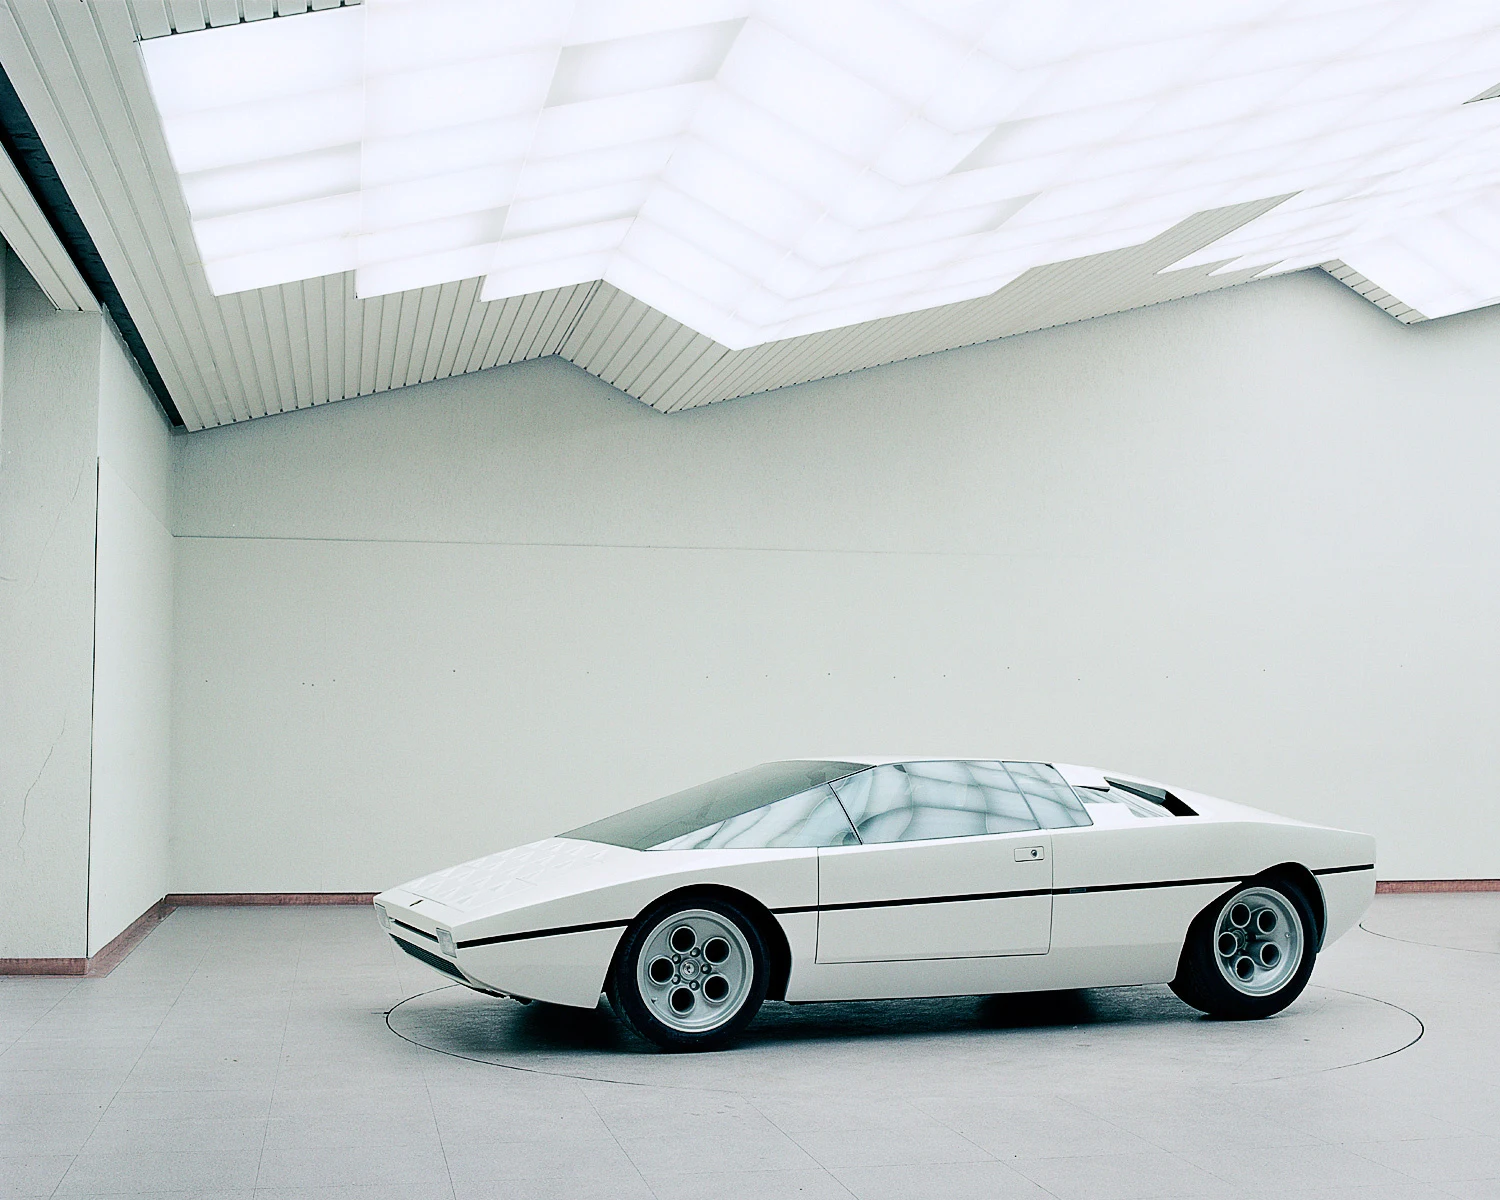 Der teuerste klassische Lamborghini im Futuredesign | Lamborghini Marzal Prototype | Fotoset Ben Redgrove